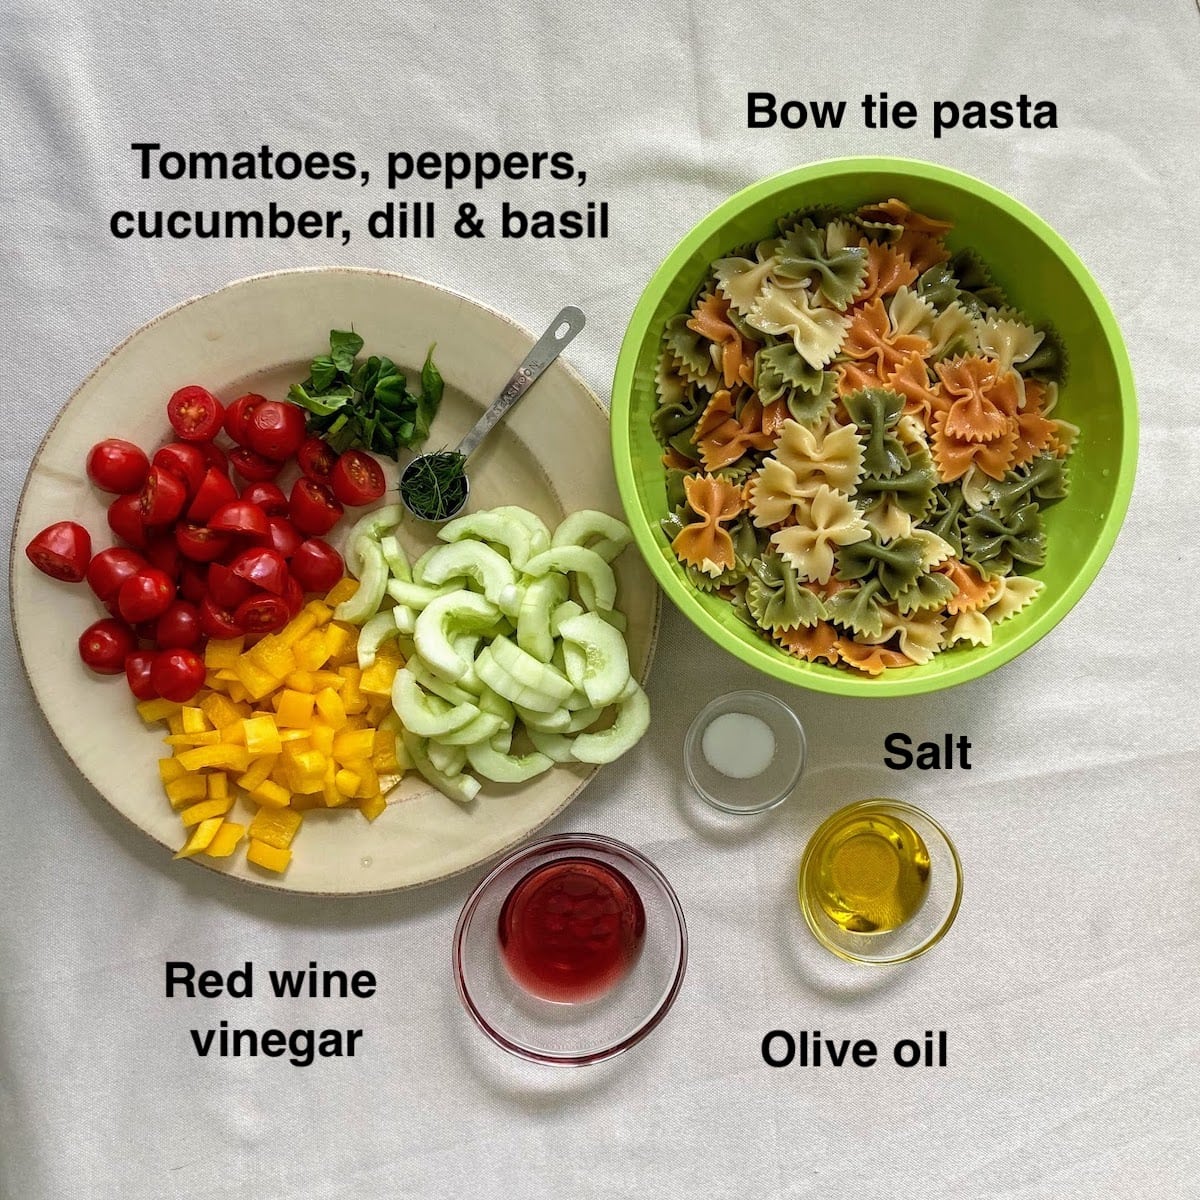 ingredients for bow tie pasta salad